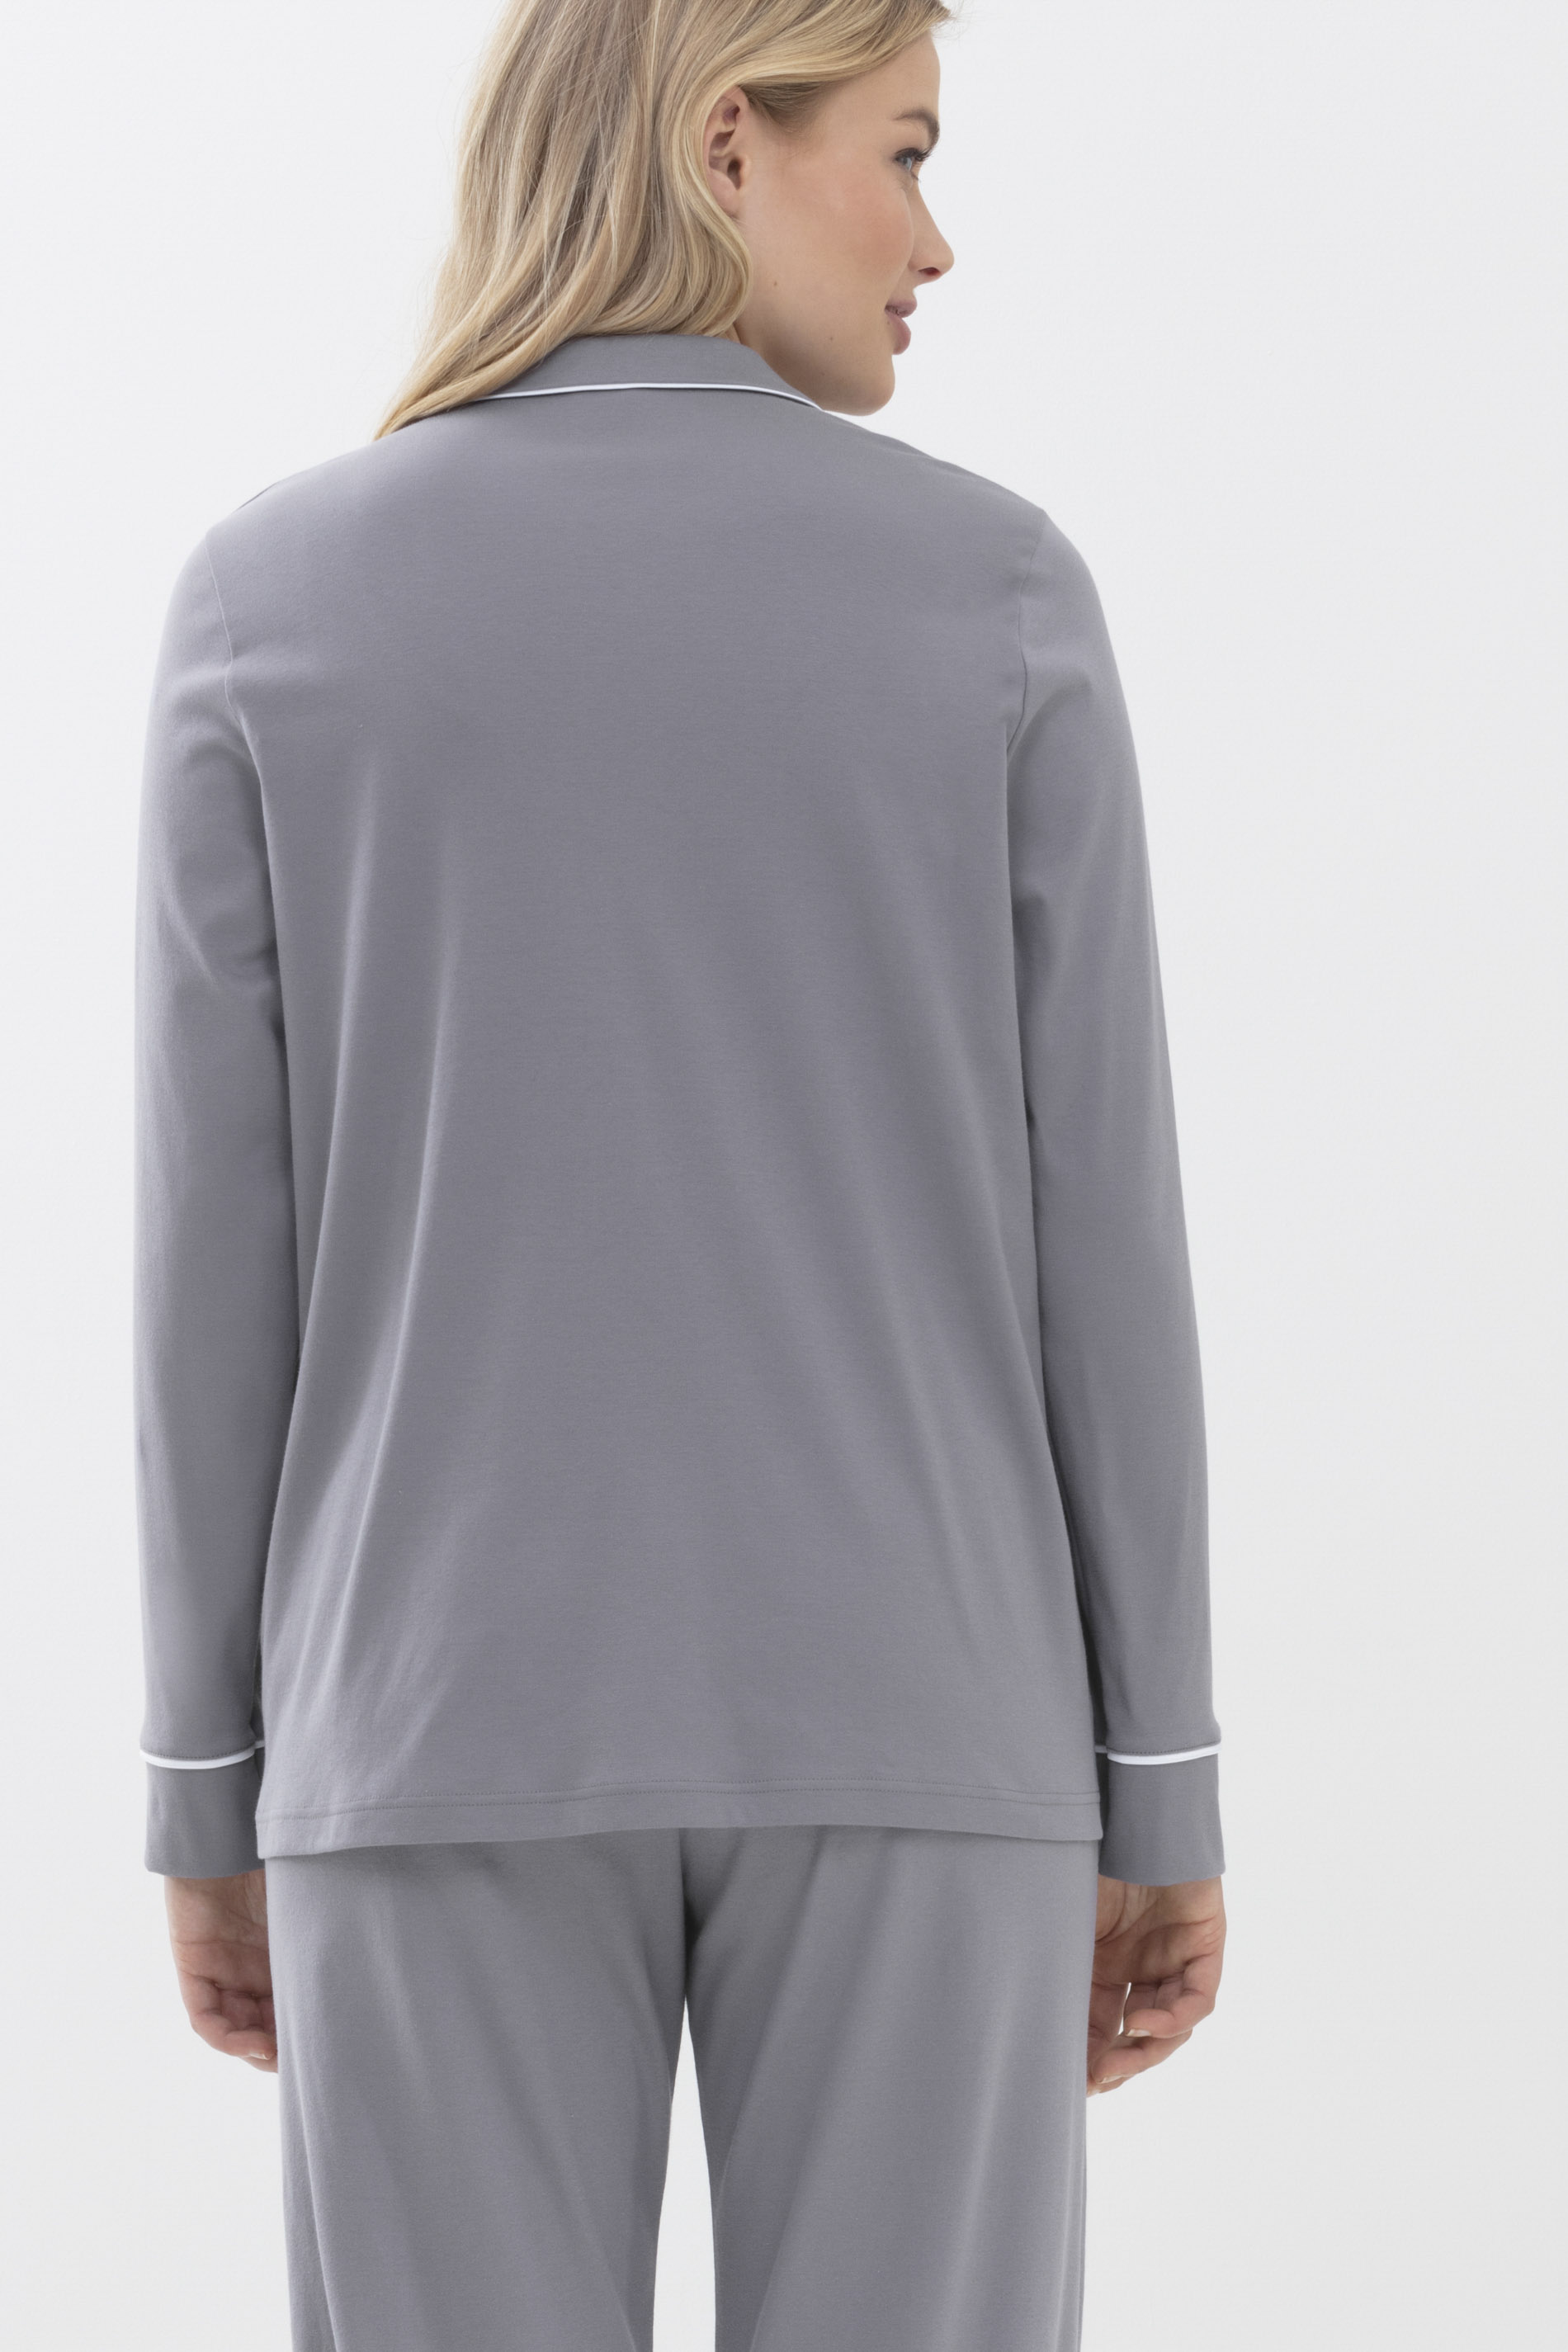 Pyjama-Shirt Lovely Grey Serie Sleepsation Rückansicht | mey®